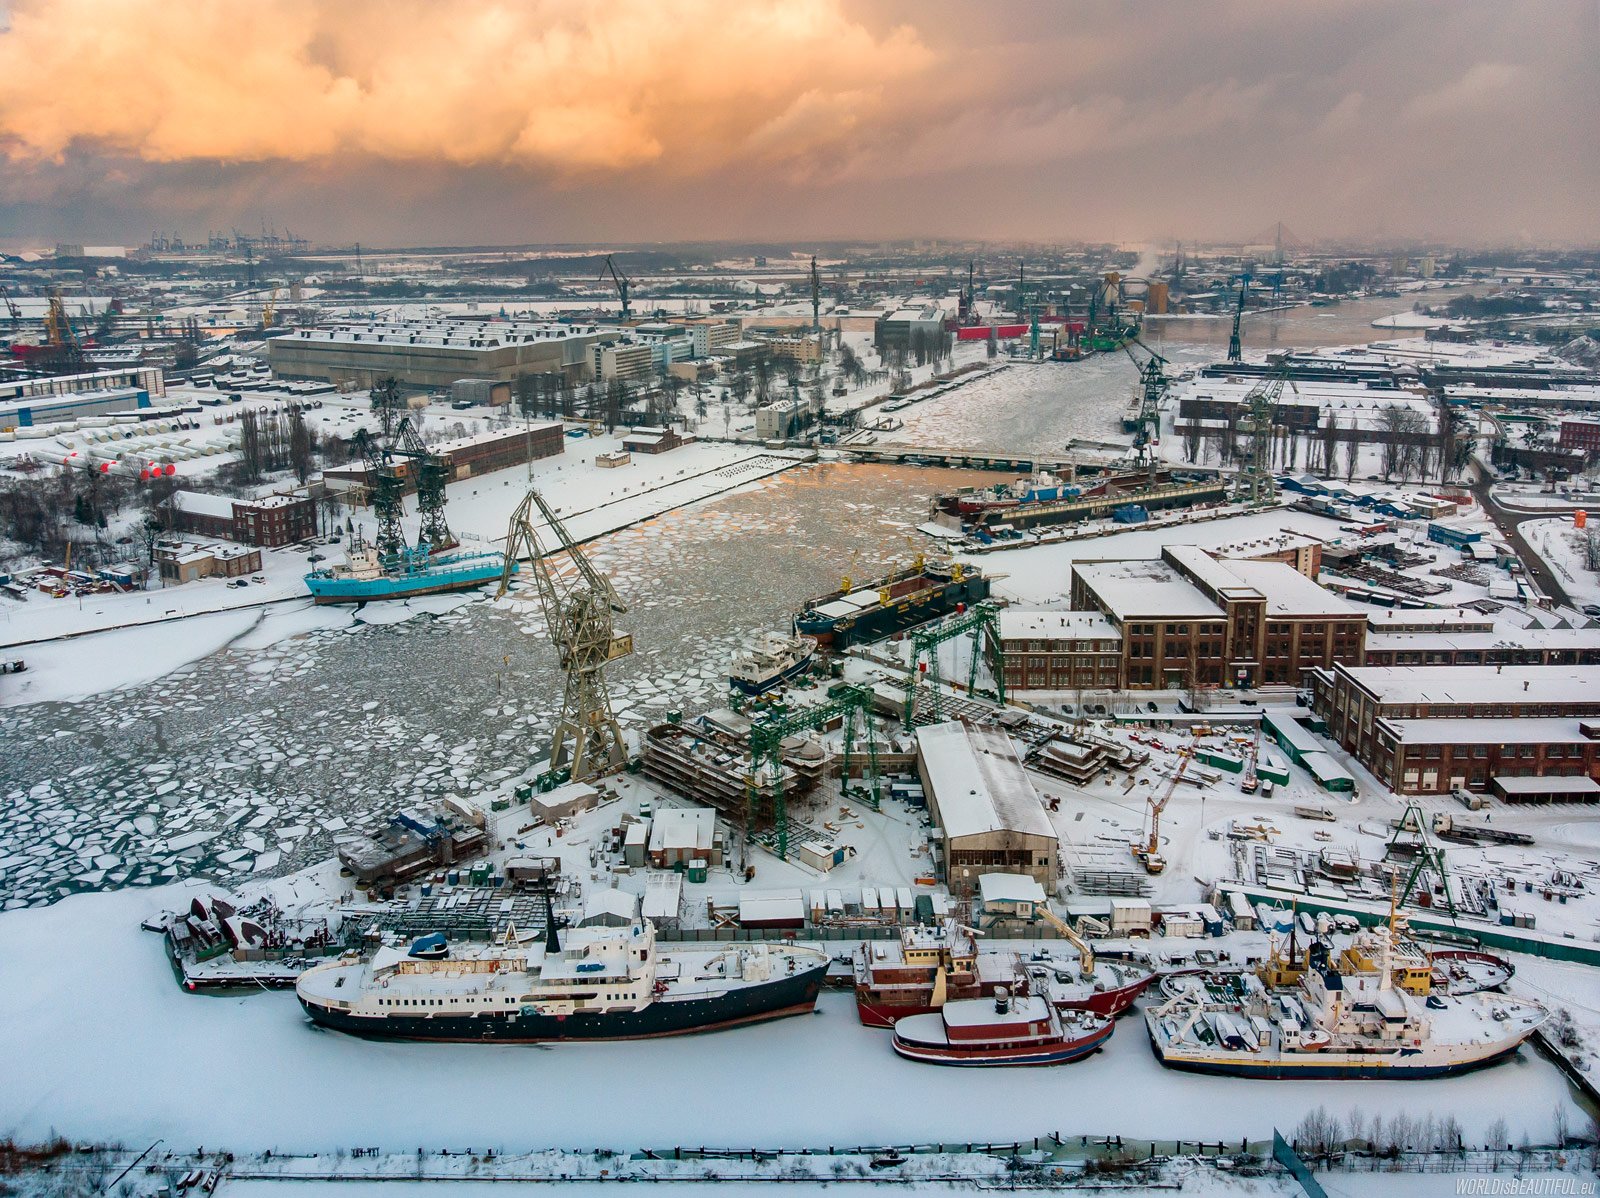 Shipyard areas in winter